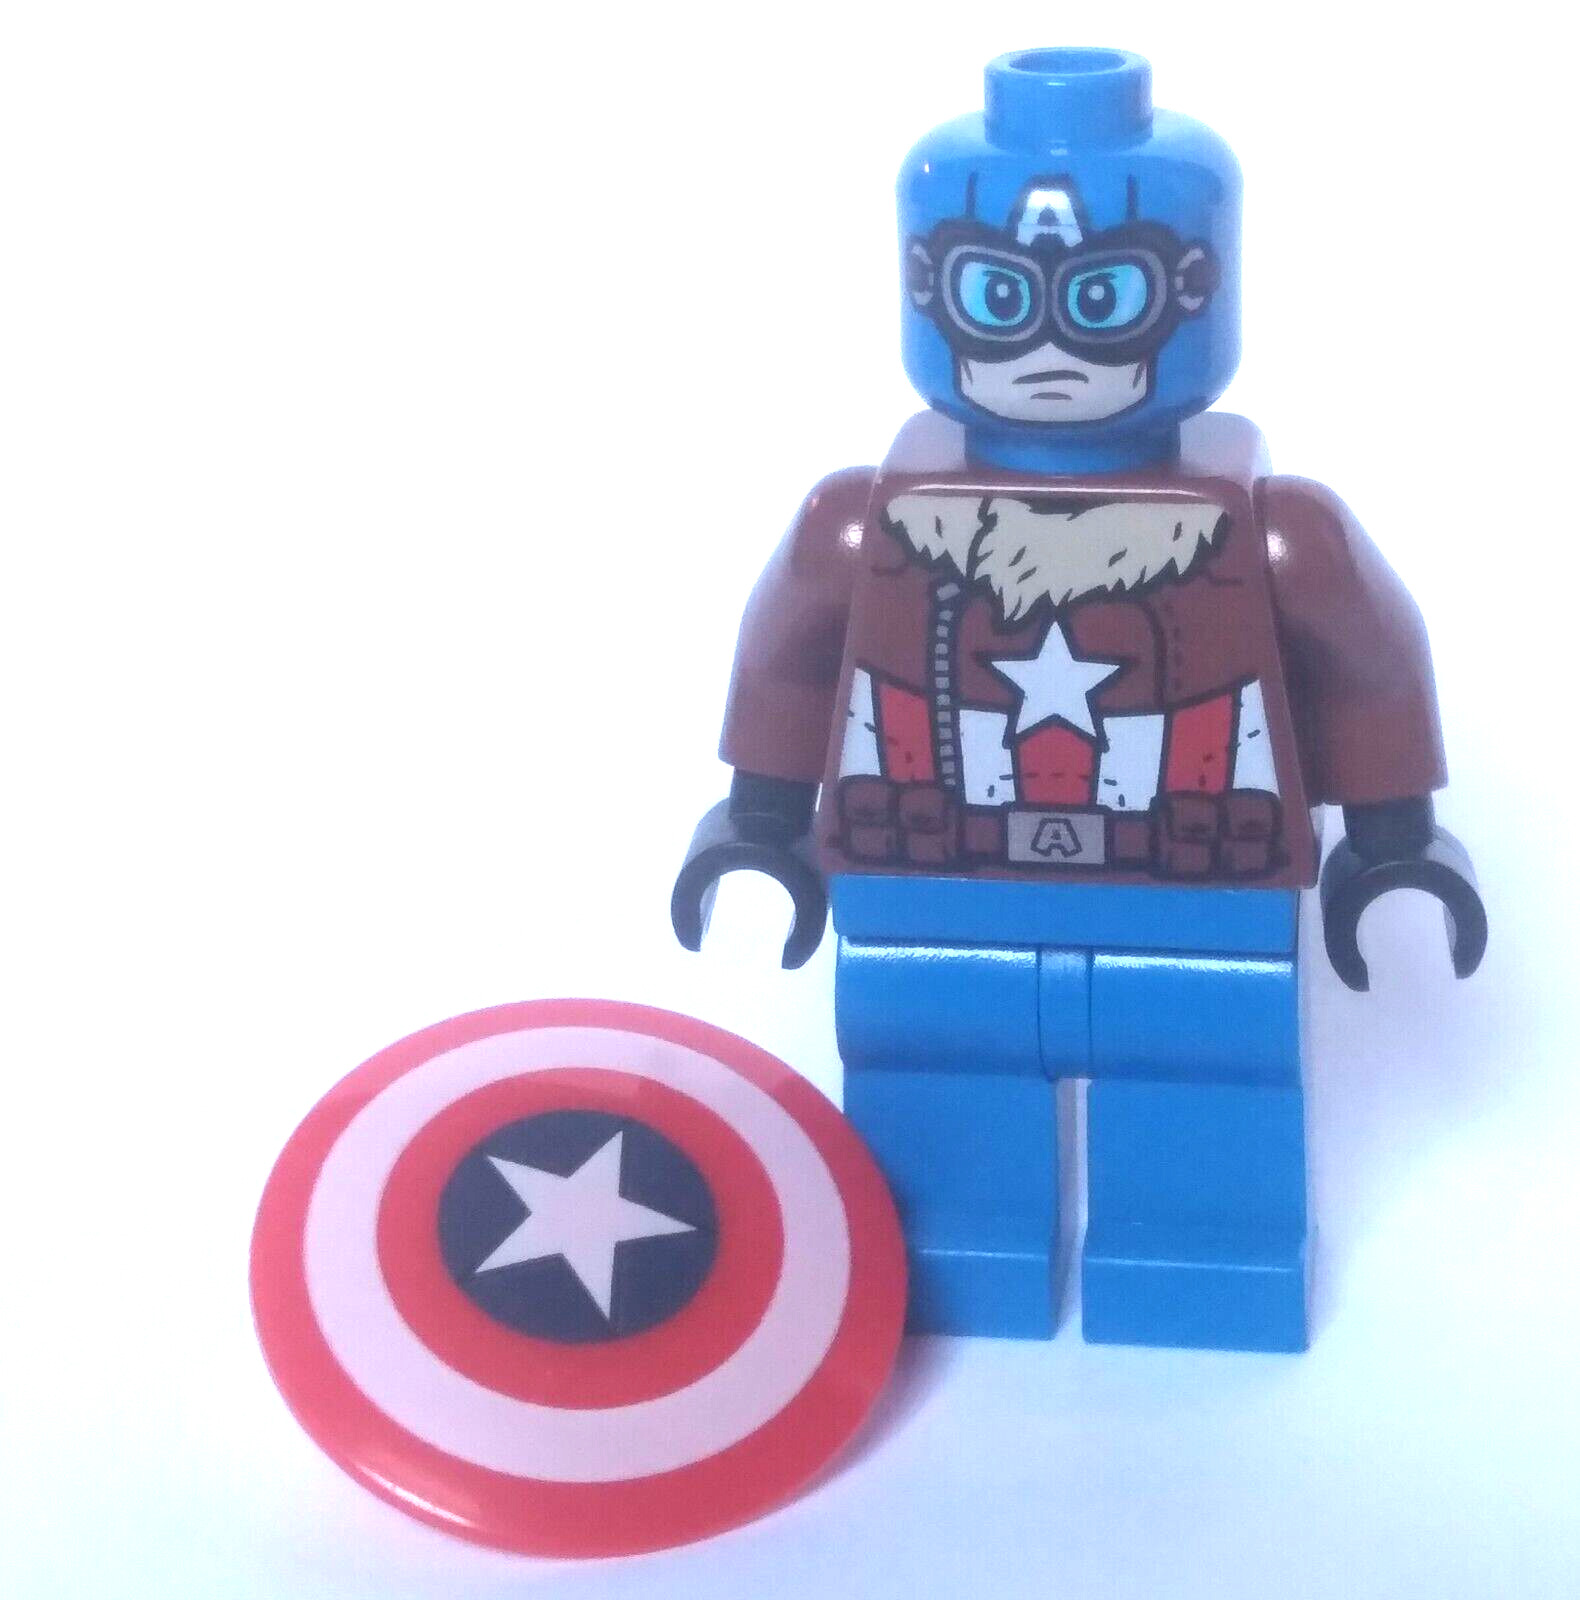 LEGO Marvel Super Heroes PILOT CAPTAIN AMERICA MINIFIGURE from 76076